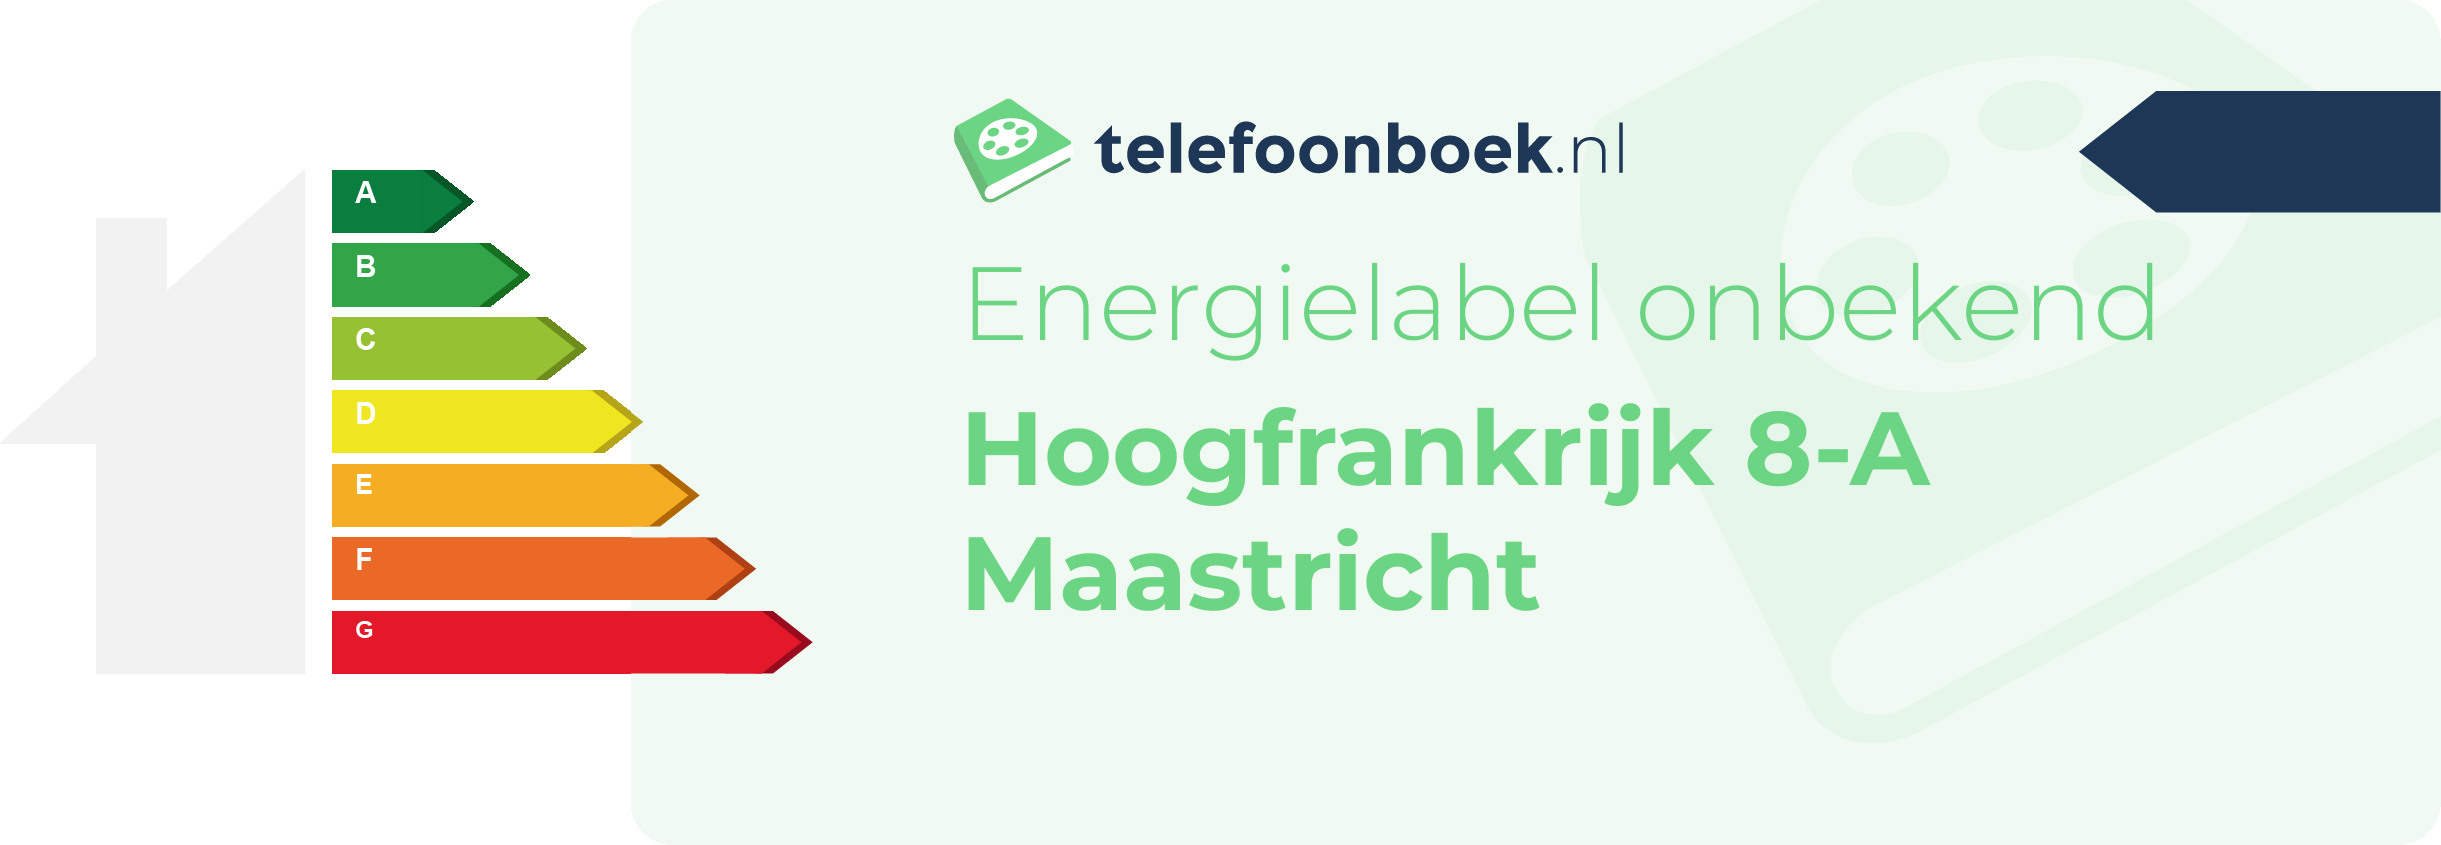 Energielabel Hoogfrankrijk 8-A Maastricht